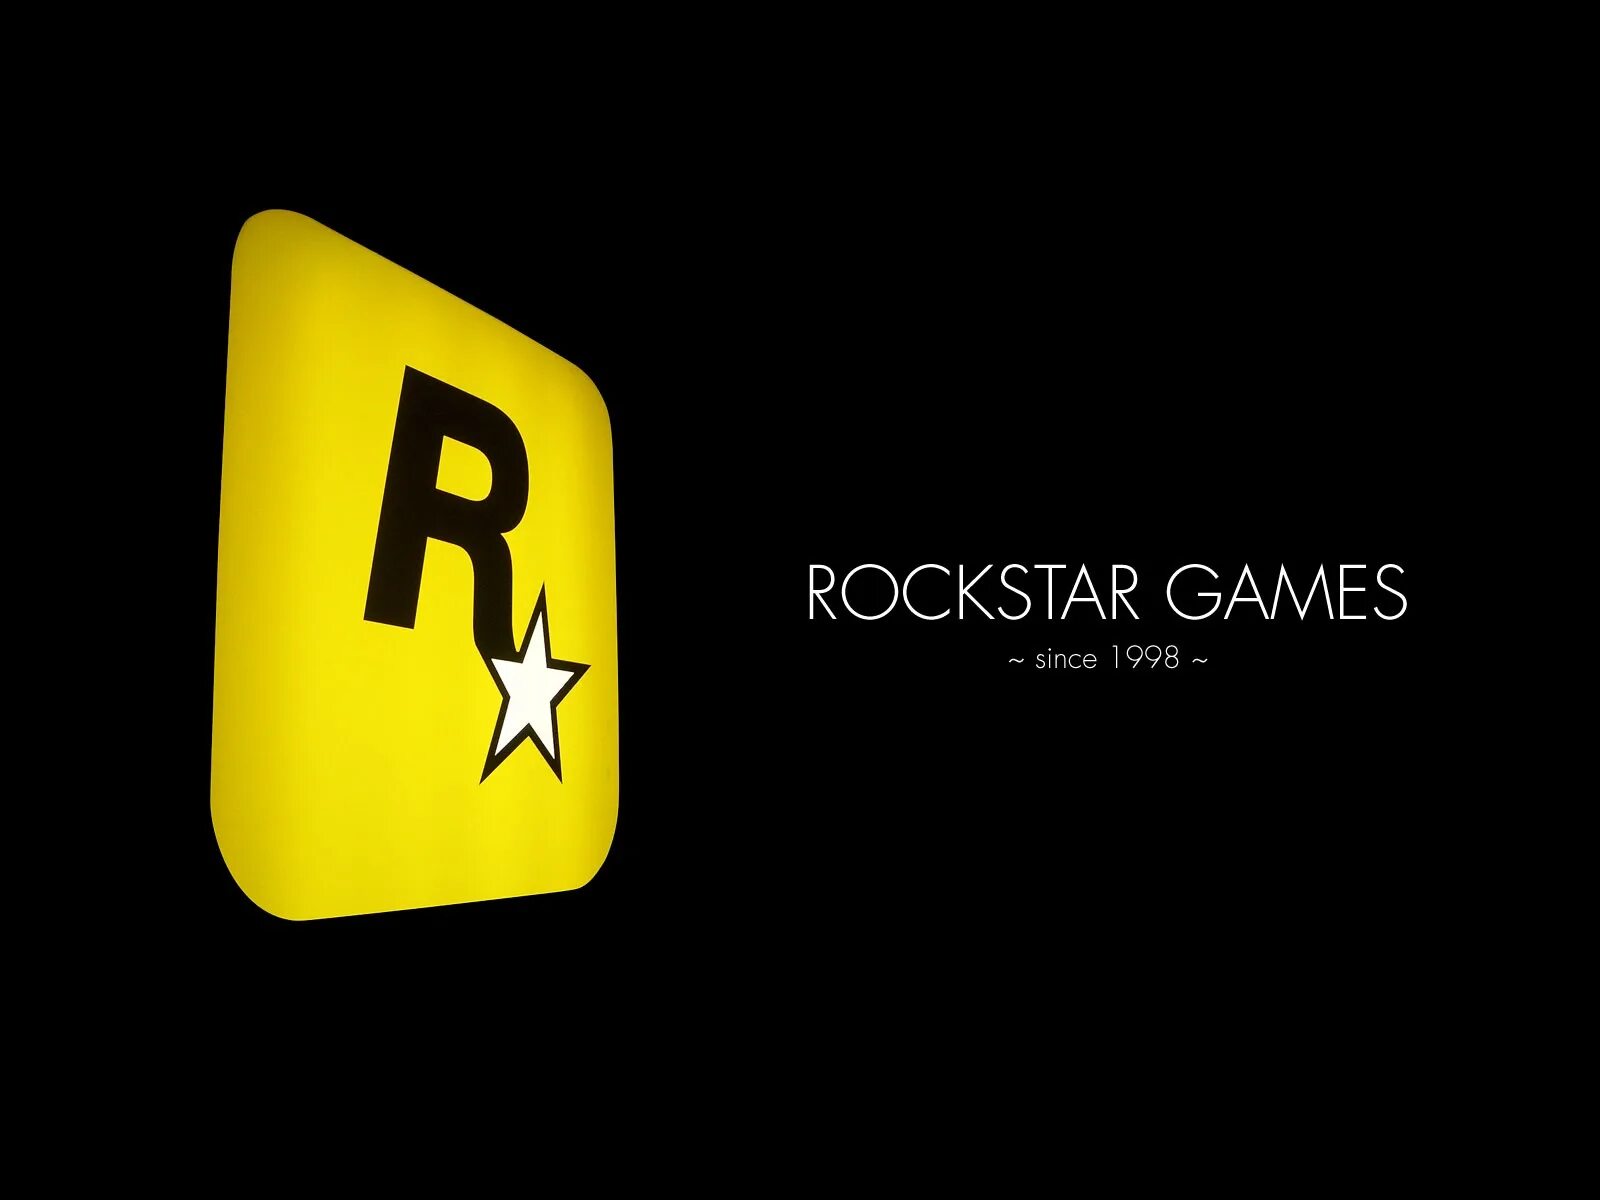 Rockstar вакансии. Rockstar games. Логотип рокстар. Rooster game. Игры Rockstar.